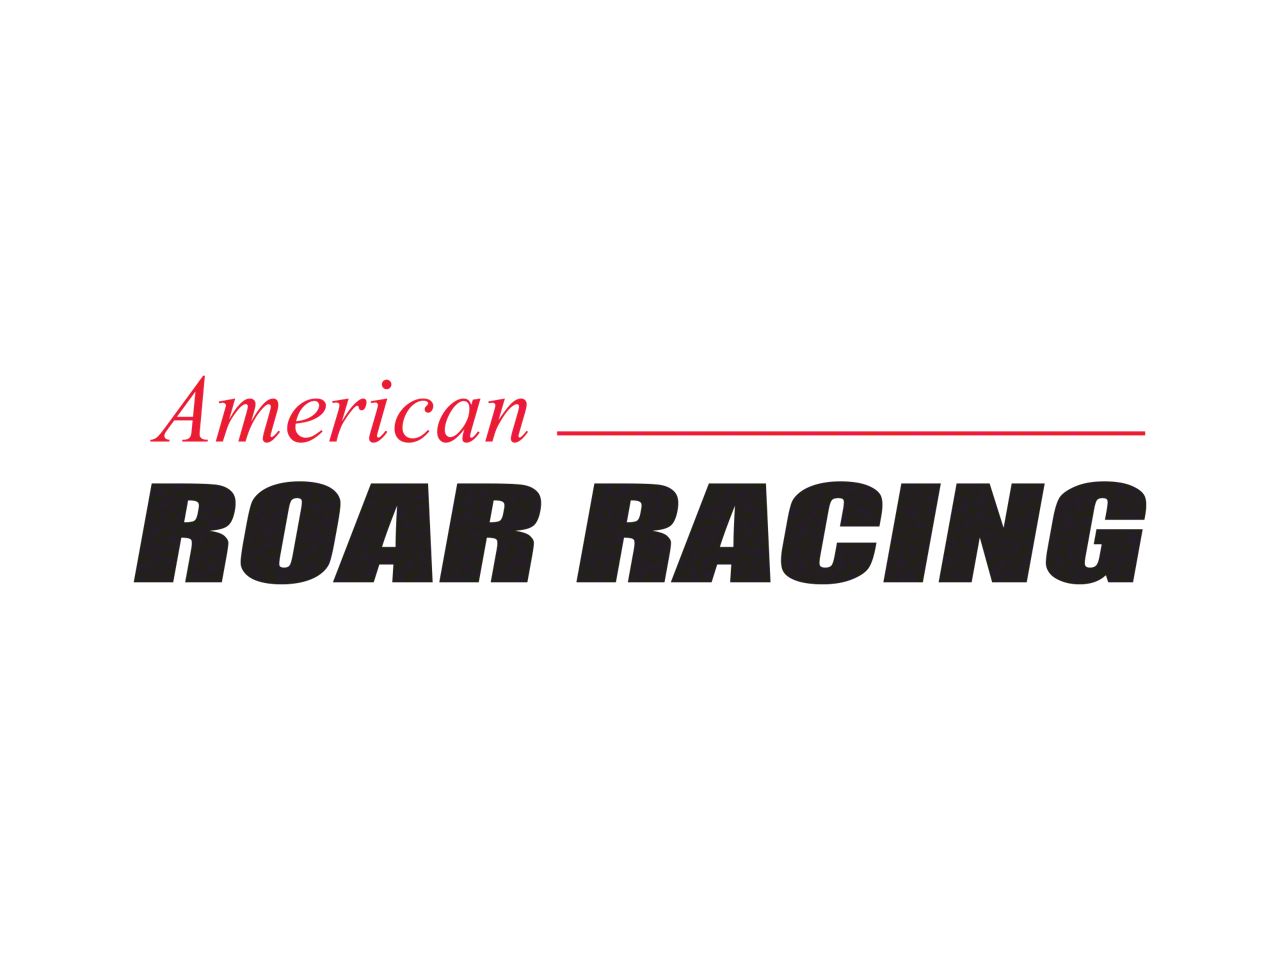 American Roar Racing Parts